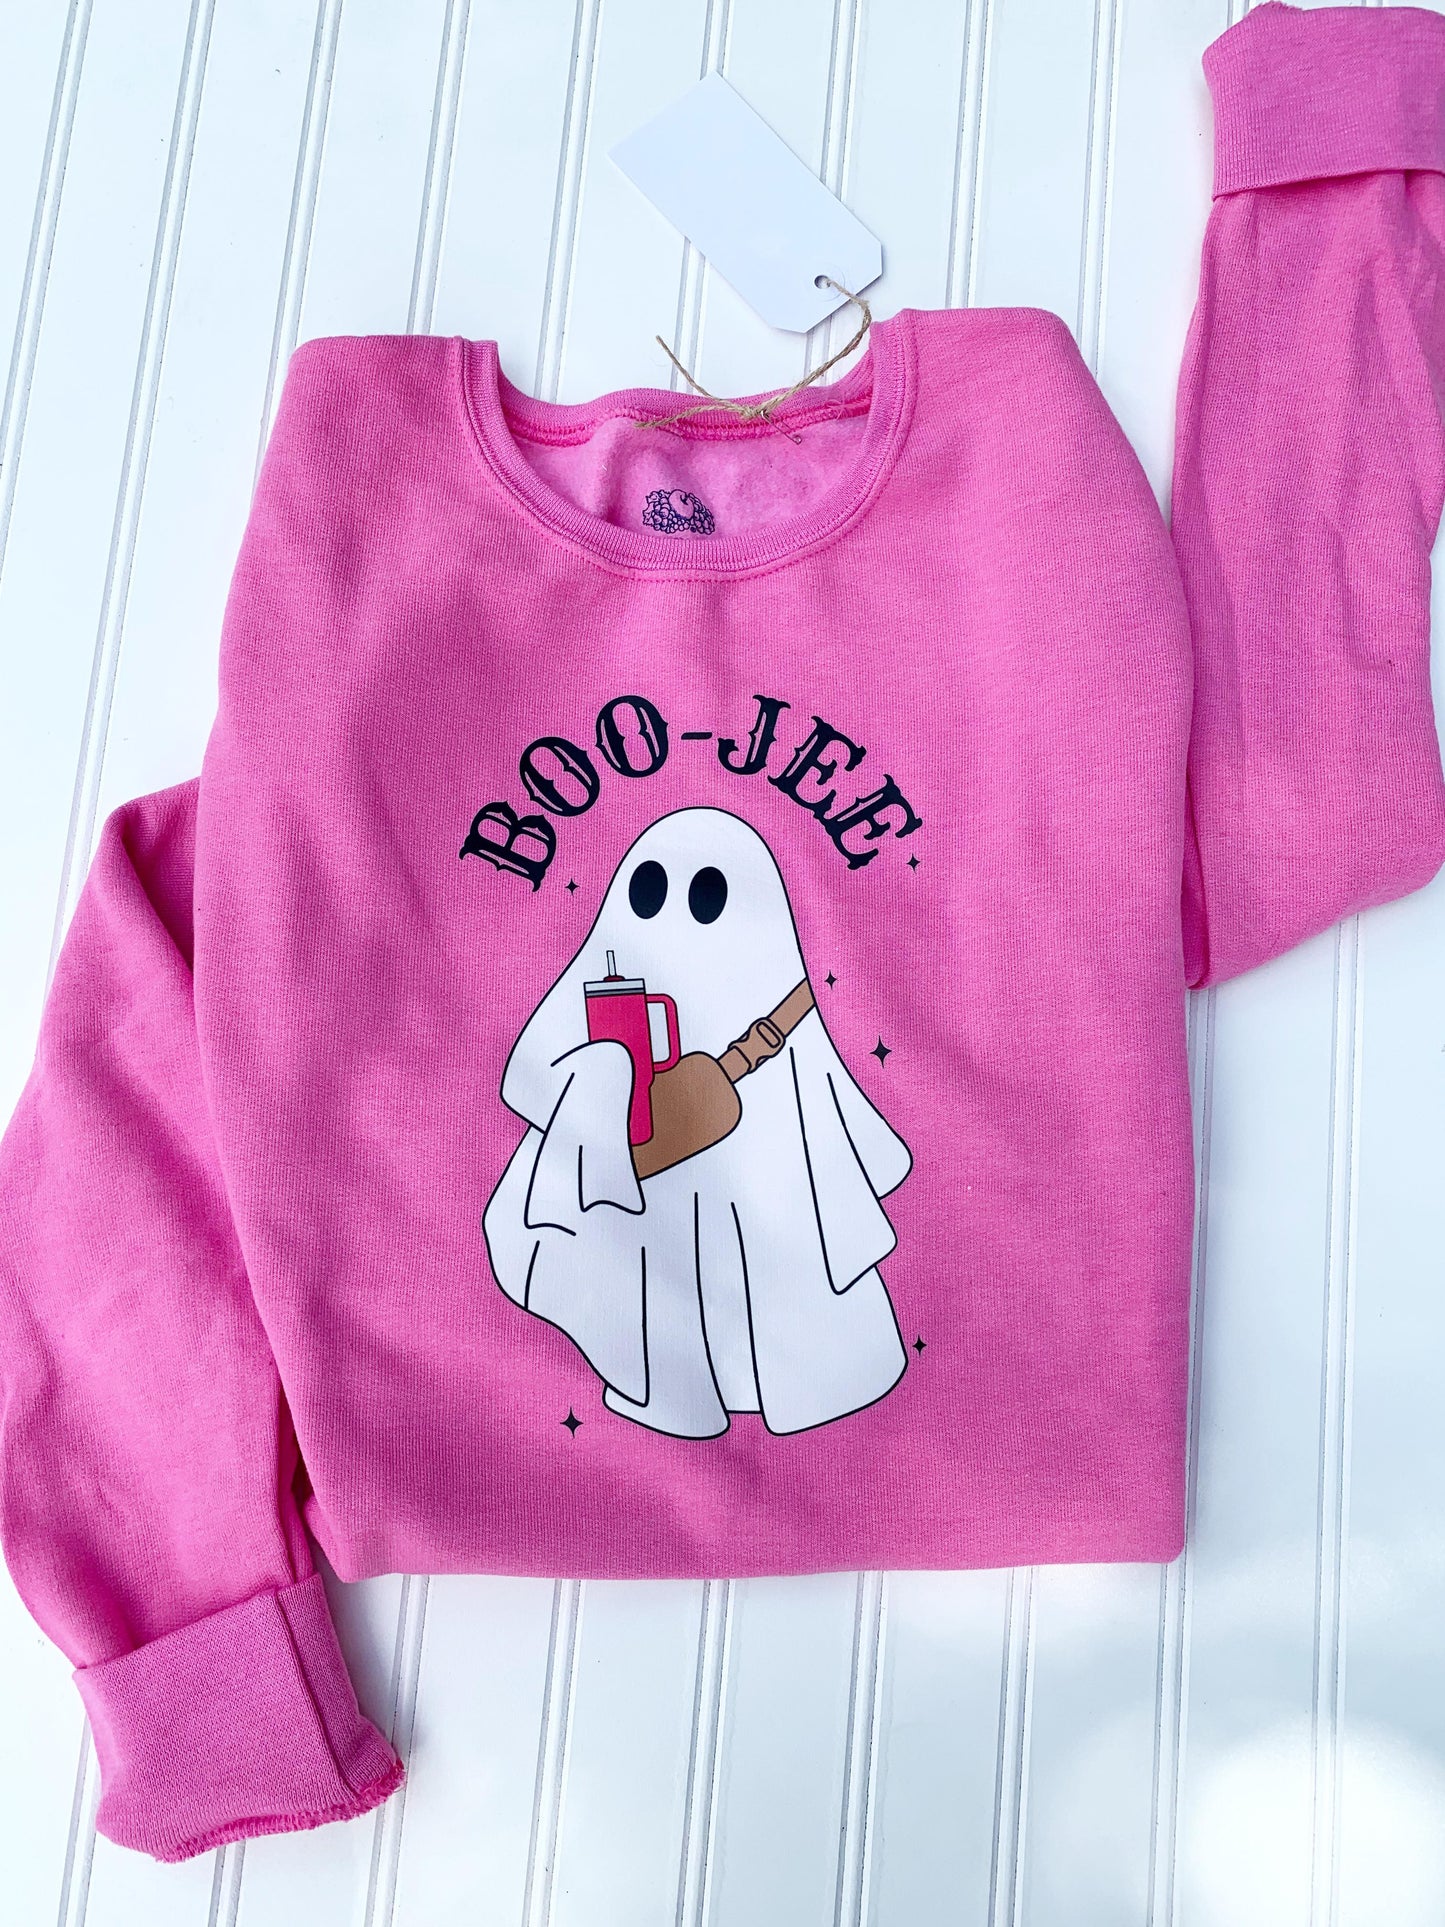 Boo-jee Spooky Season Crewneck Sweatshirt